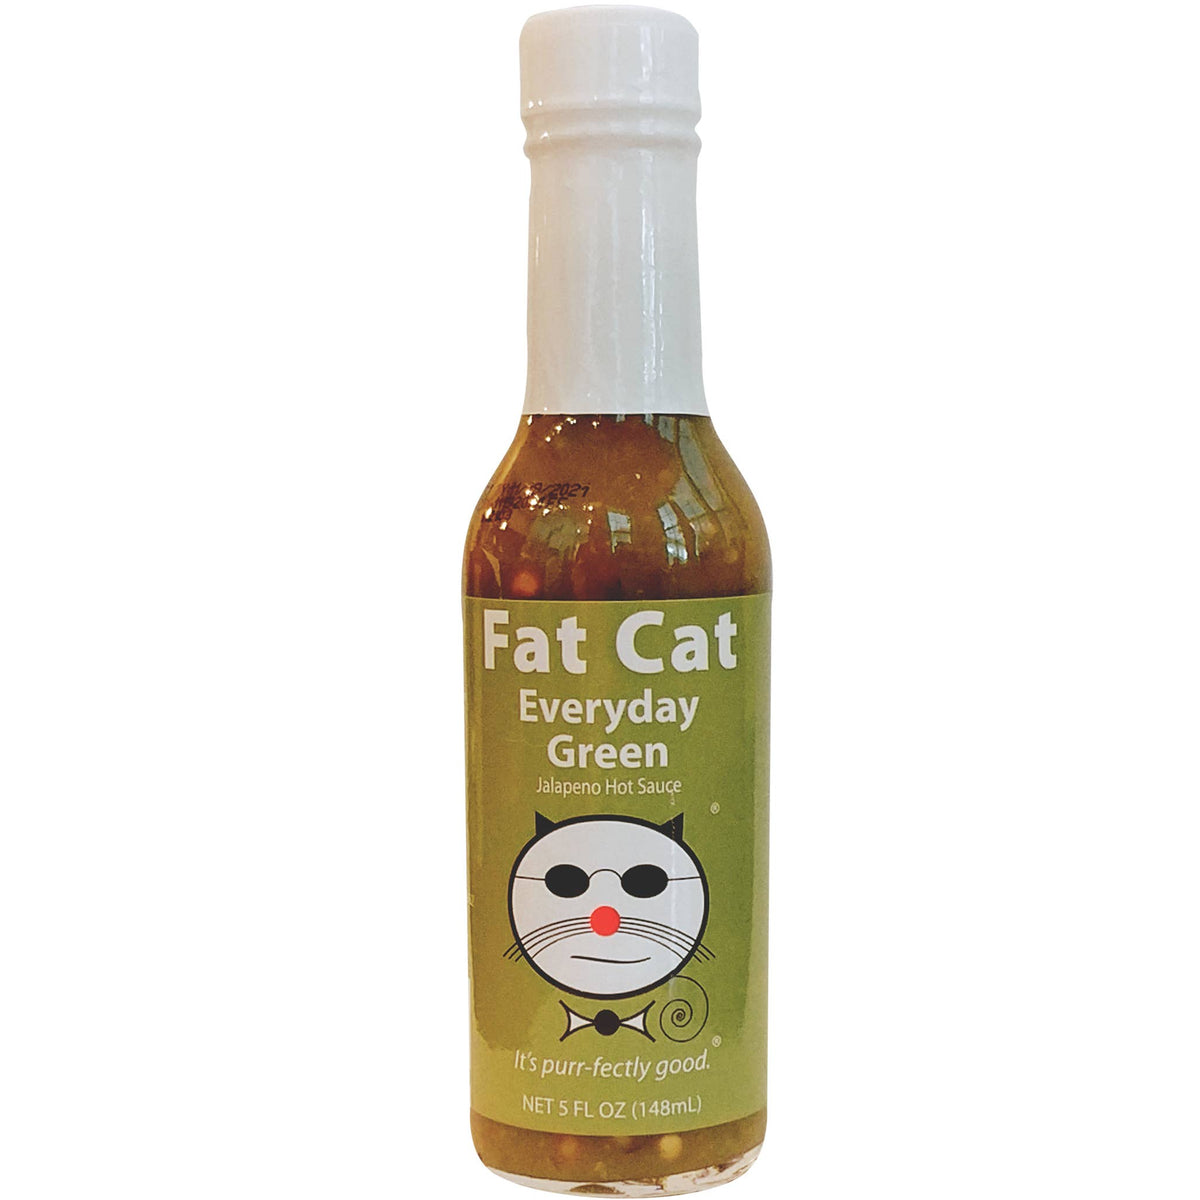 Fat Cat - Everyday Green Jalapeno Hot Sauce